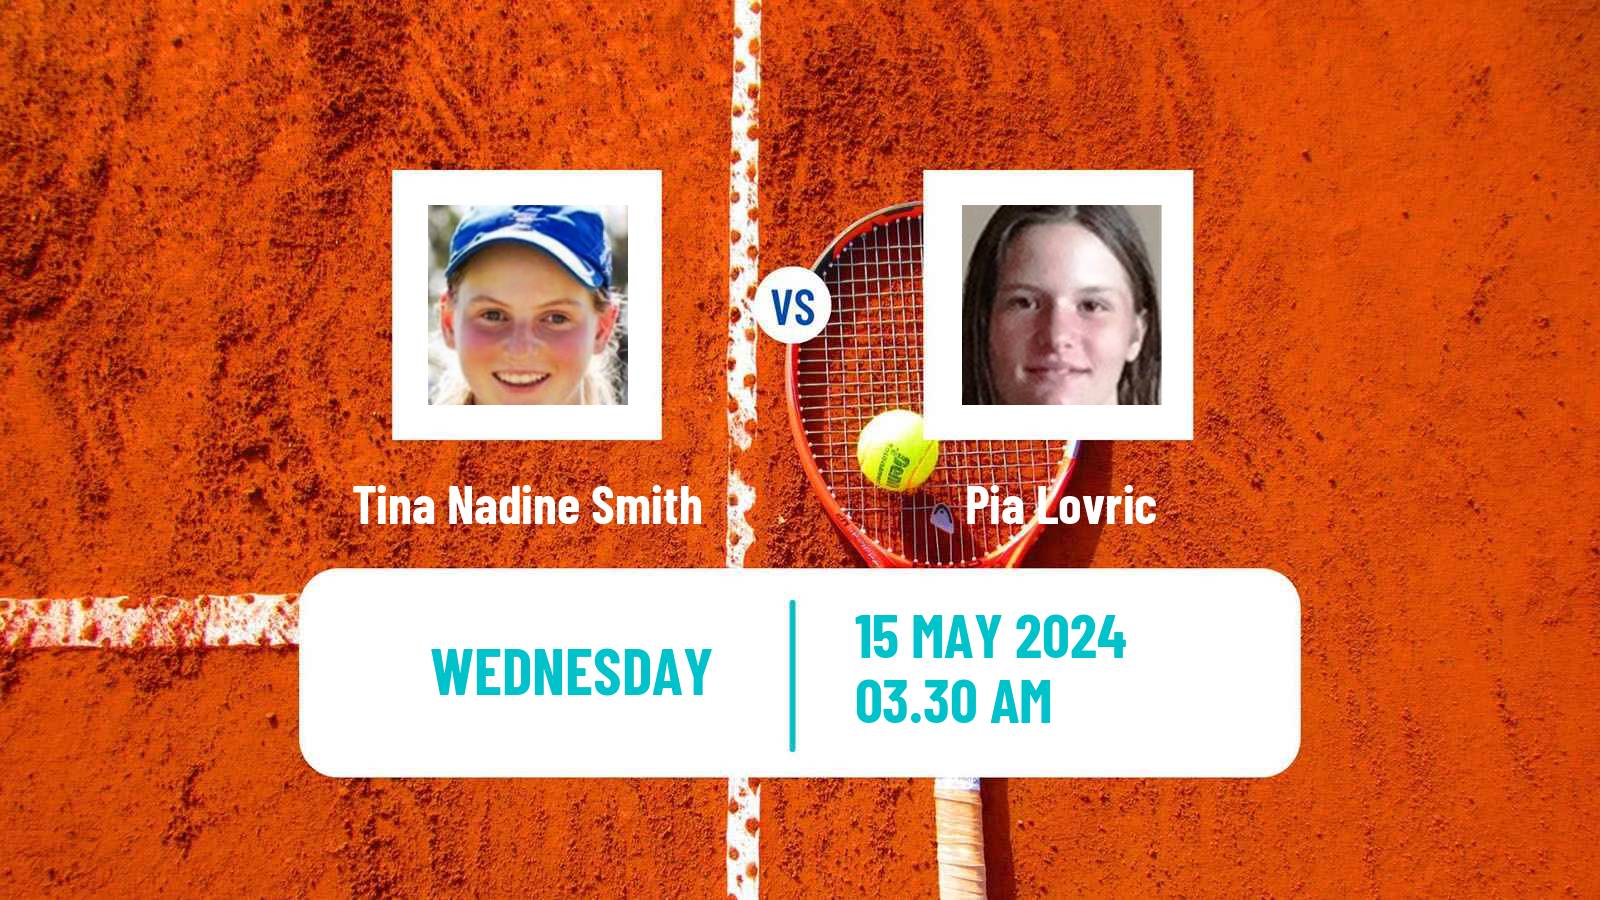 Tennis ITF W35 Villach Women Tina Nadine Smith - Pia Lovric